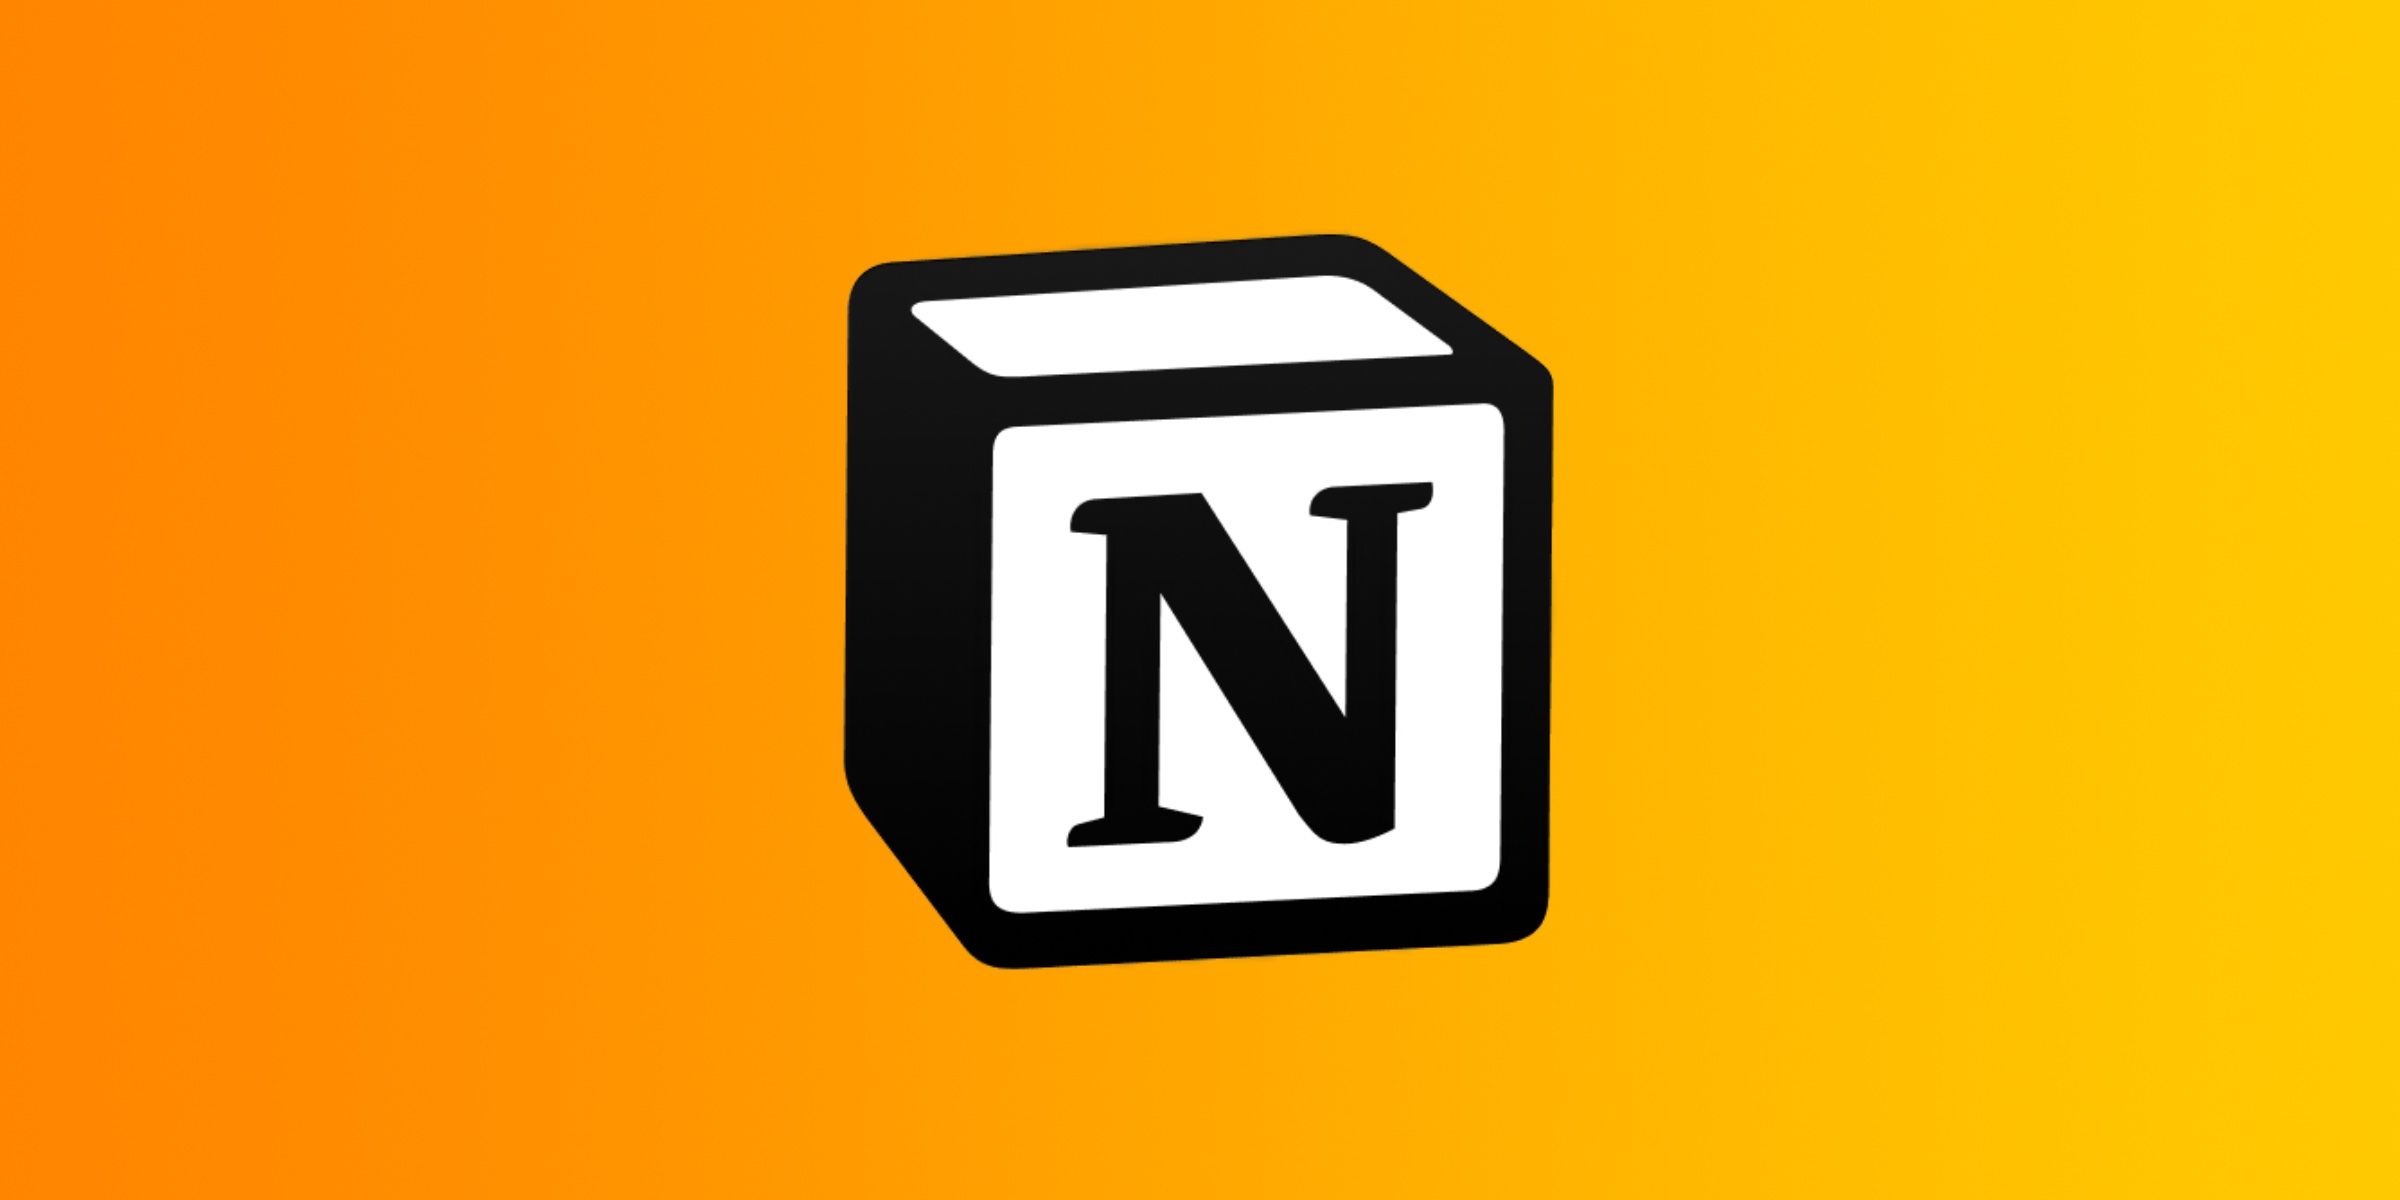 The Notion logo against an orange gradient background.